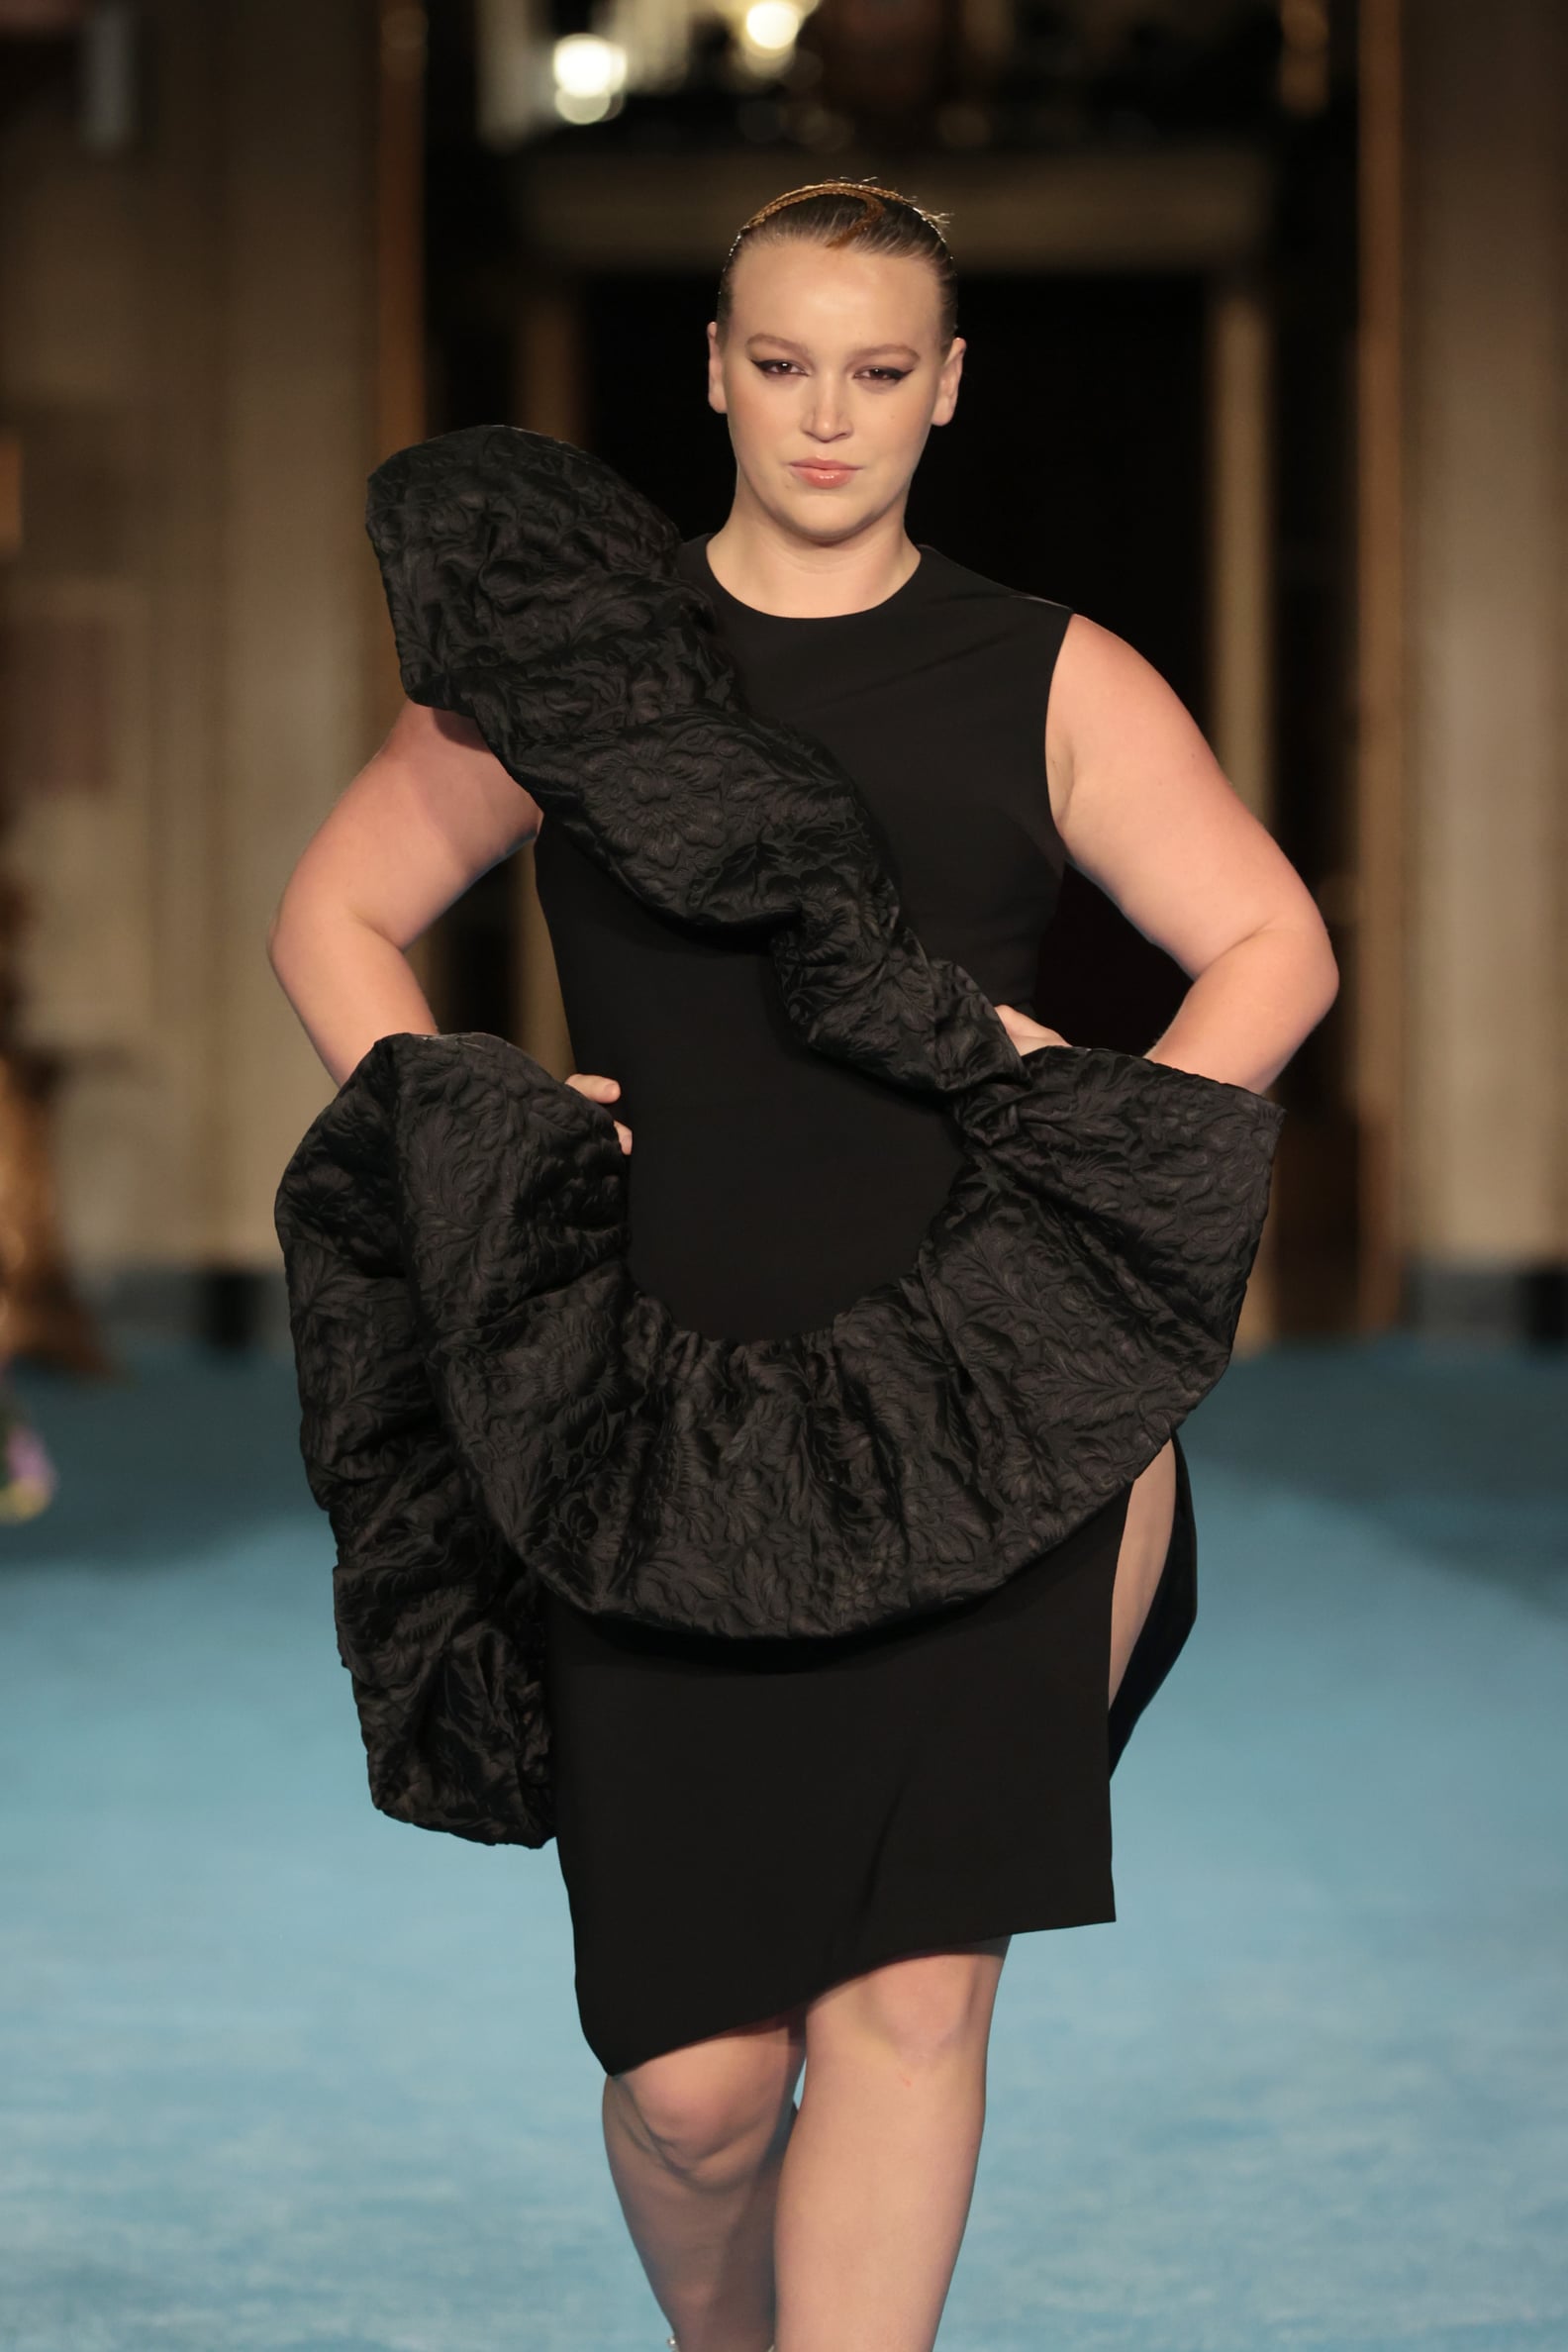 See Christian Siriano's Spring '22 Show at Fashion Week | POPSUGAR Fashion